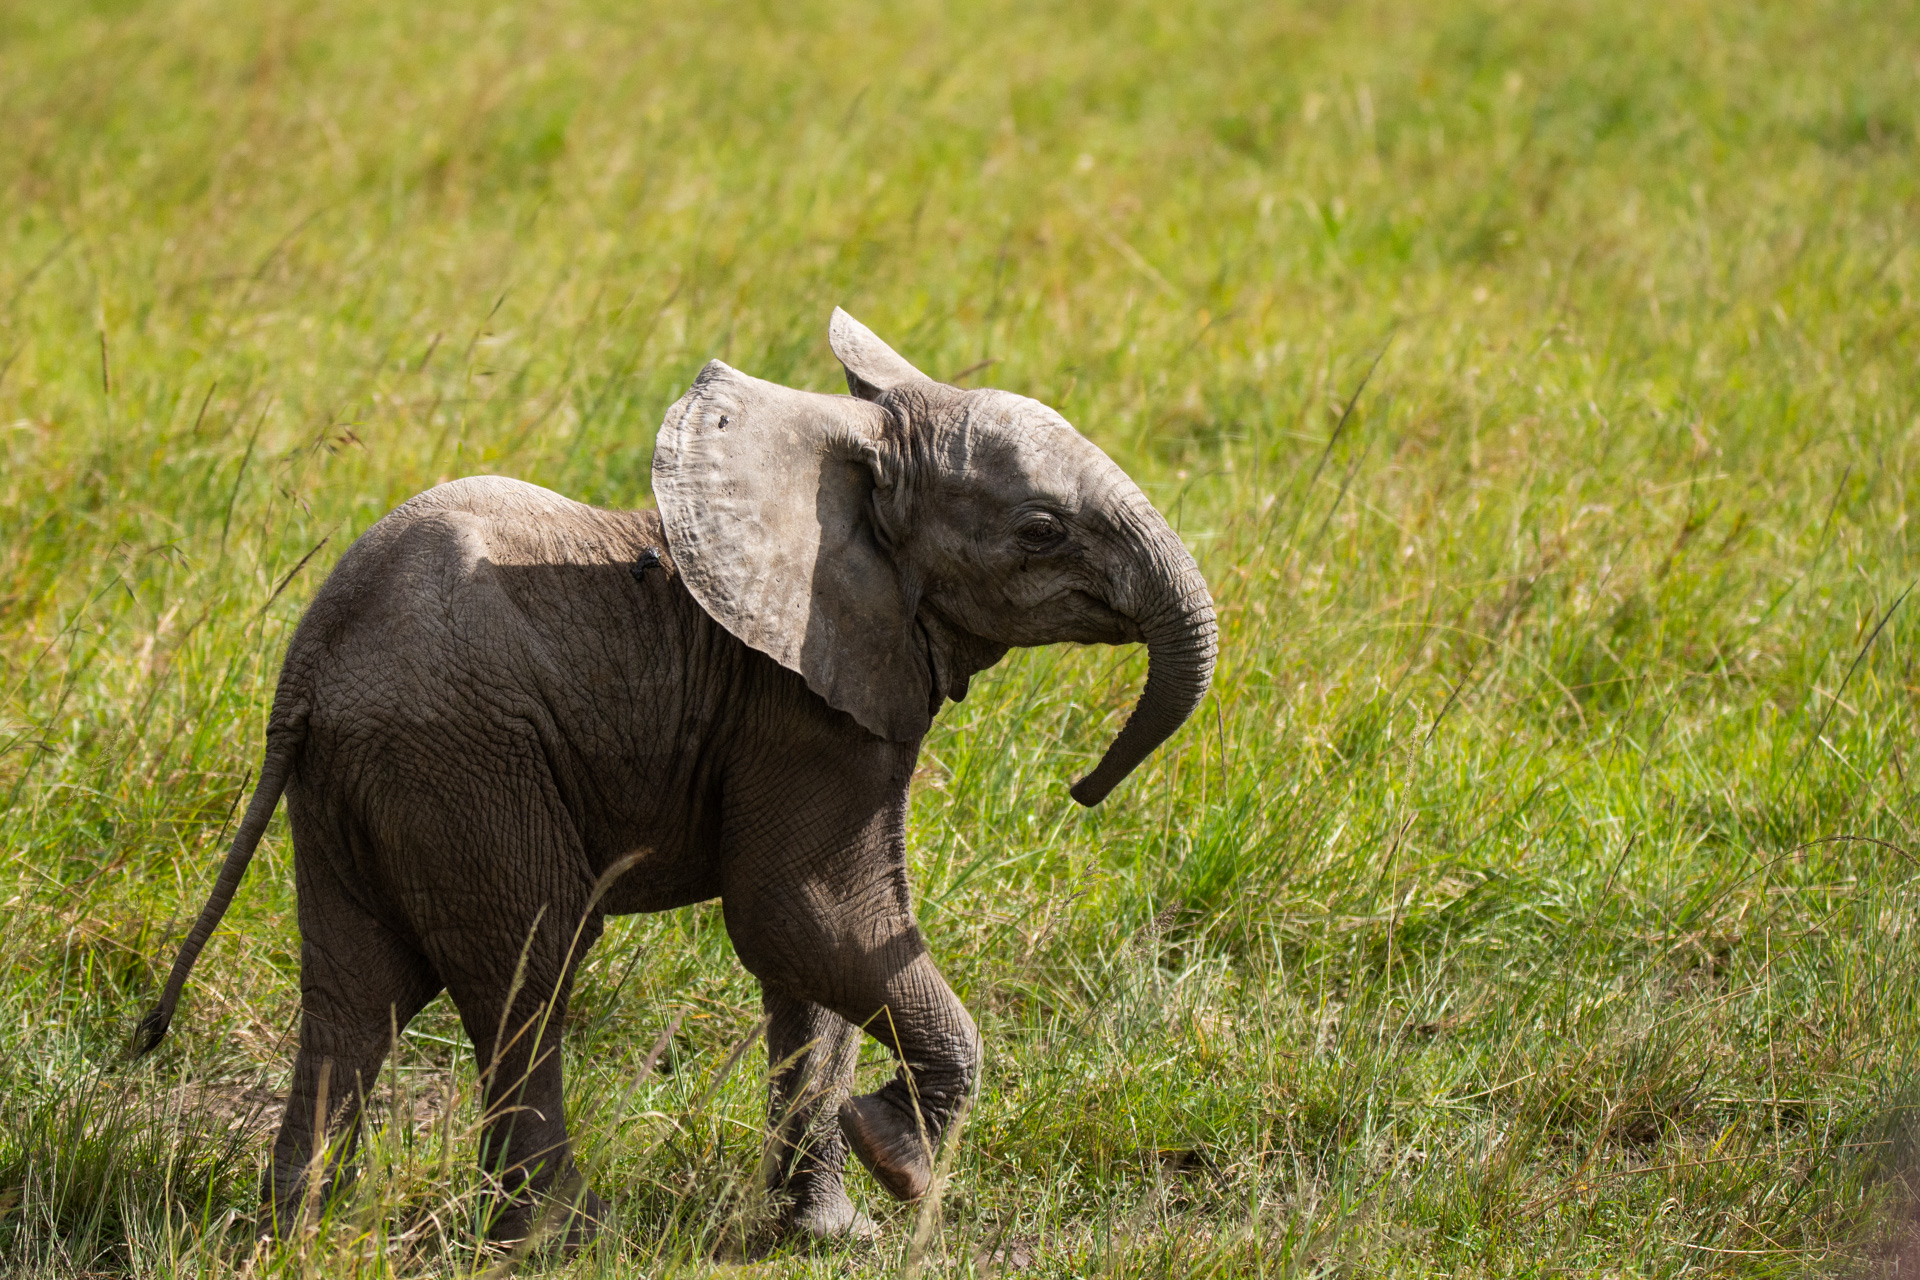 Elephant calf posing